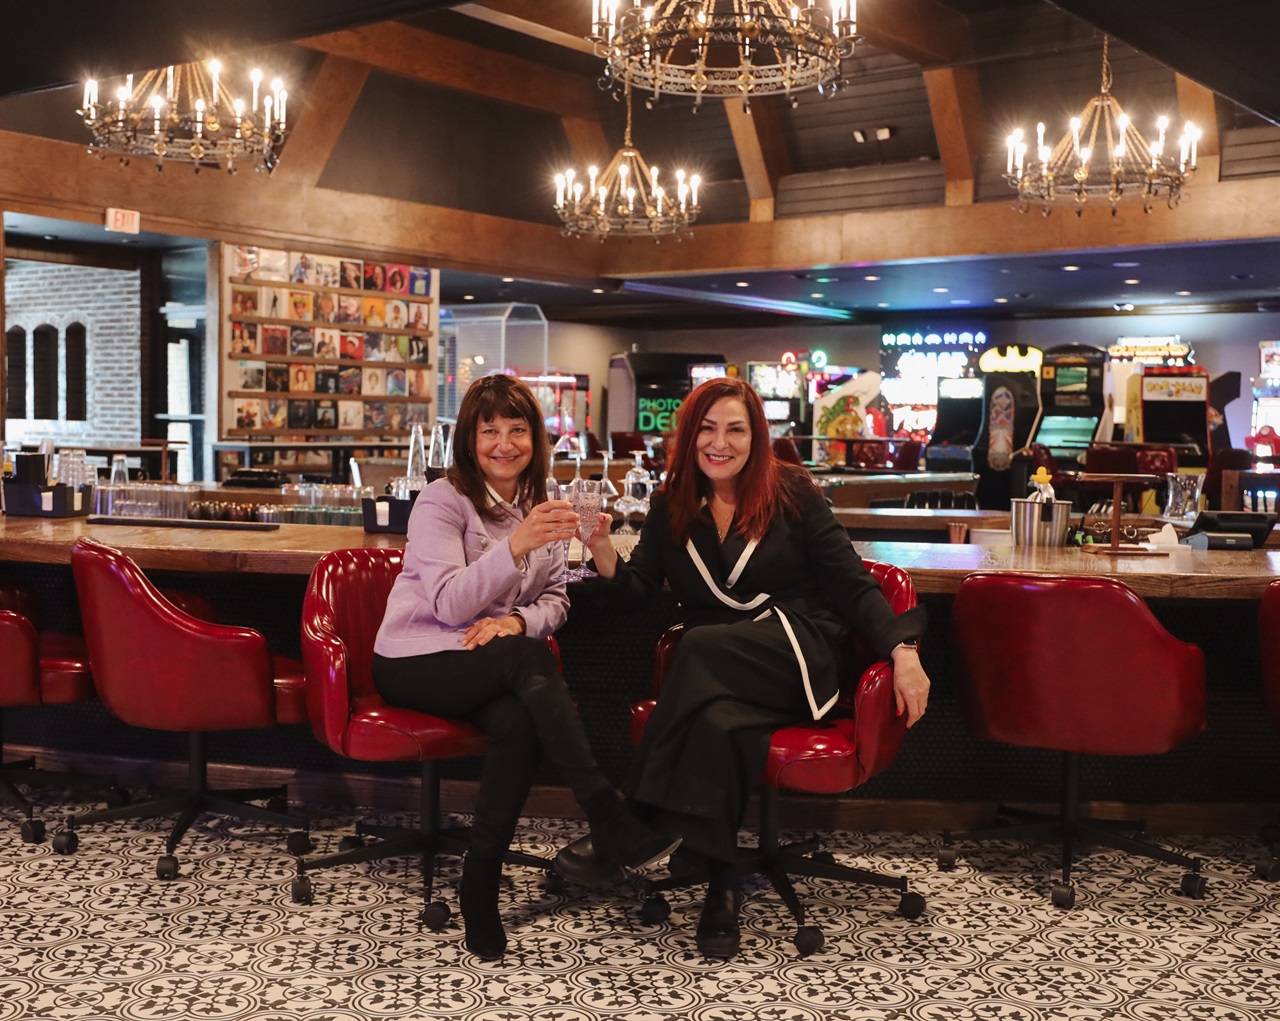 Angela Harrington, owner of The Highlander Hotel (left), and Danise Petsel, owner of Iowa River Power Restaurant (right).